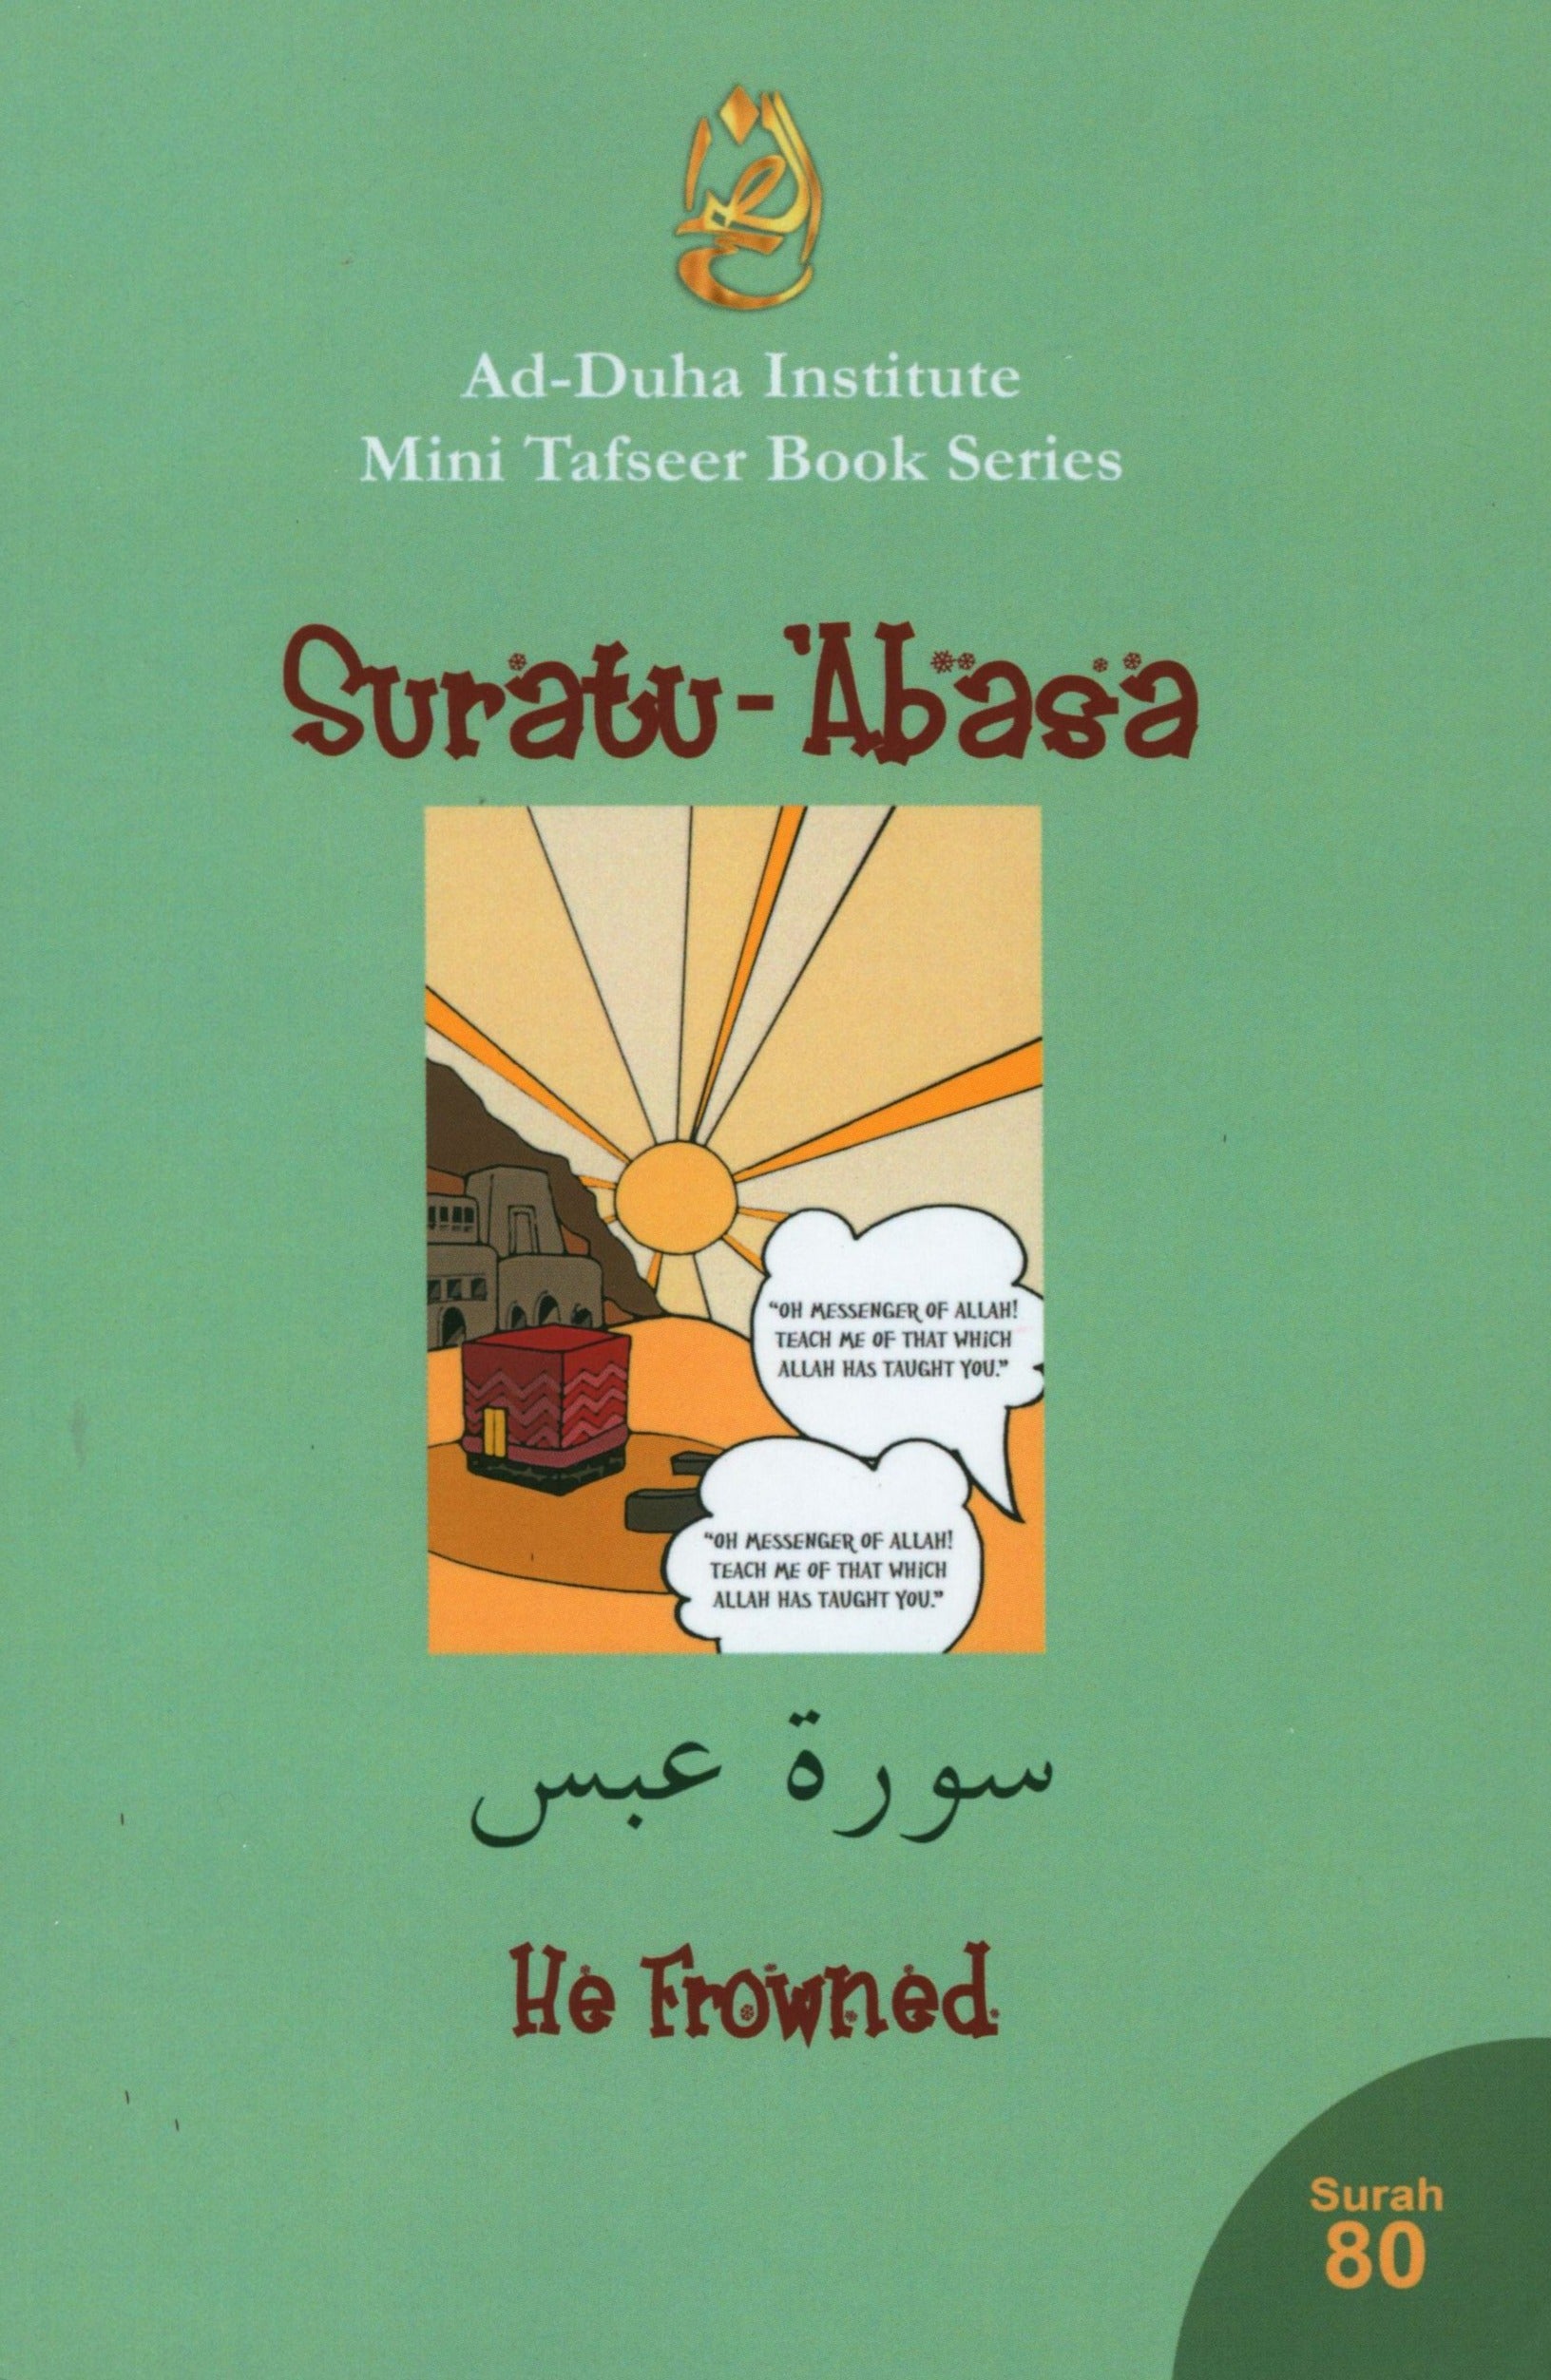 Mini Tafseer Book Suratu 'Abasa (Surah 80)